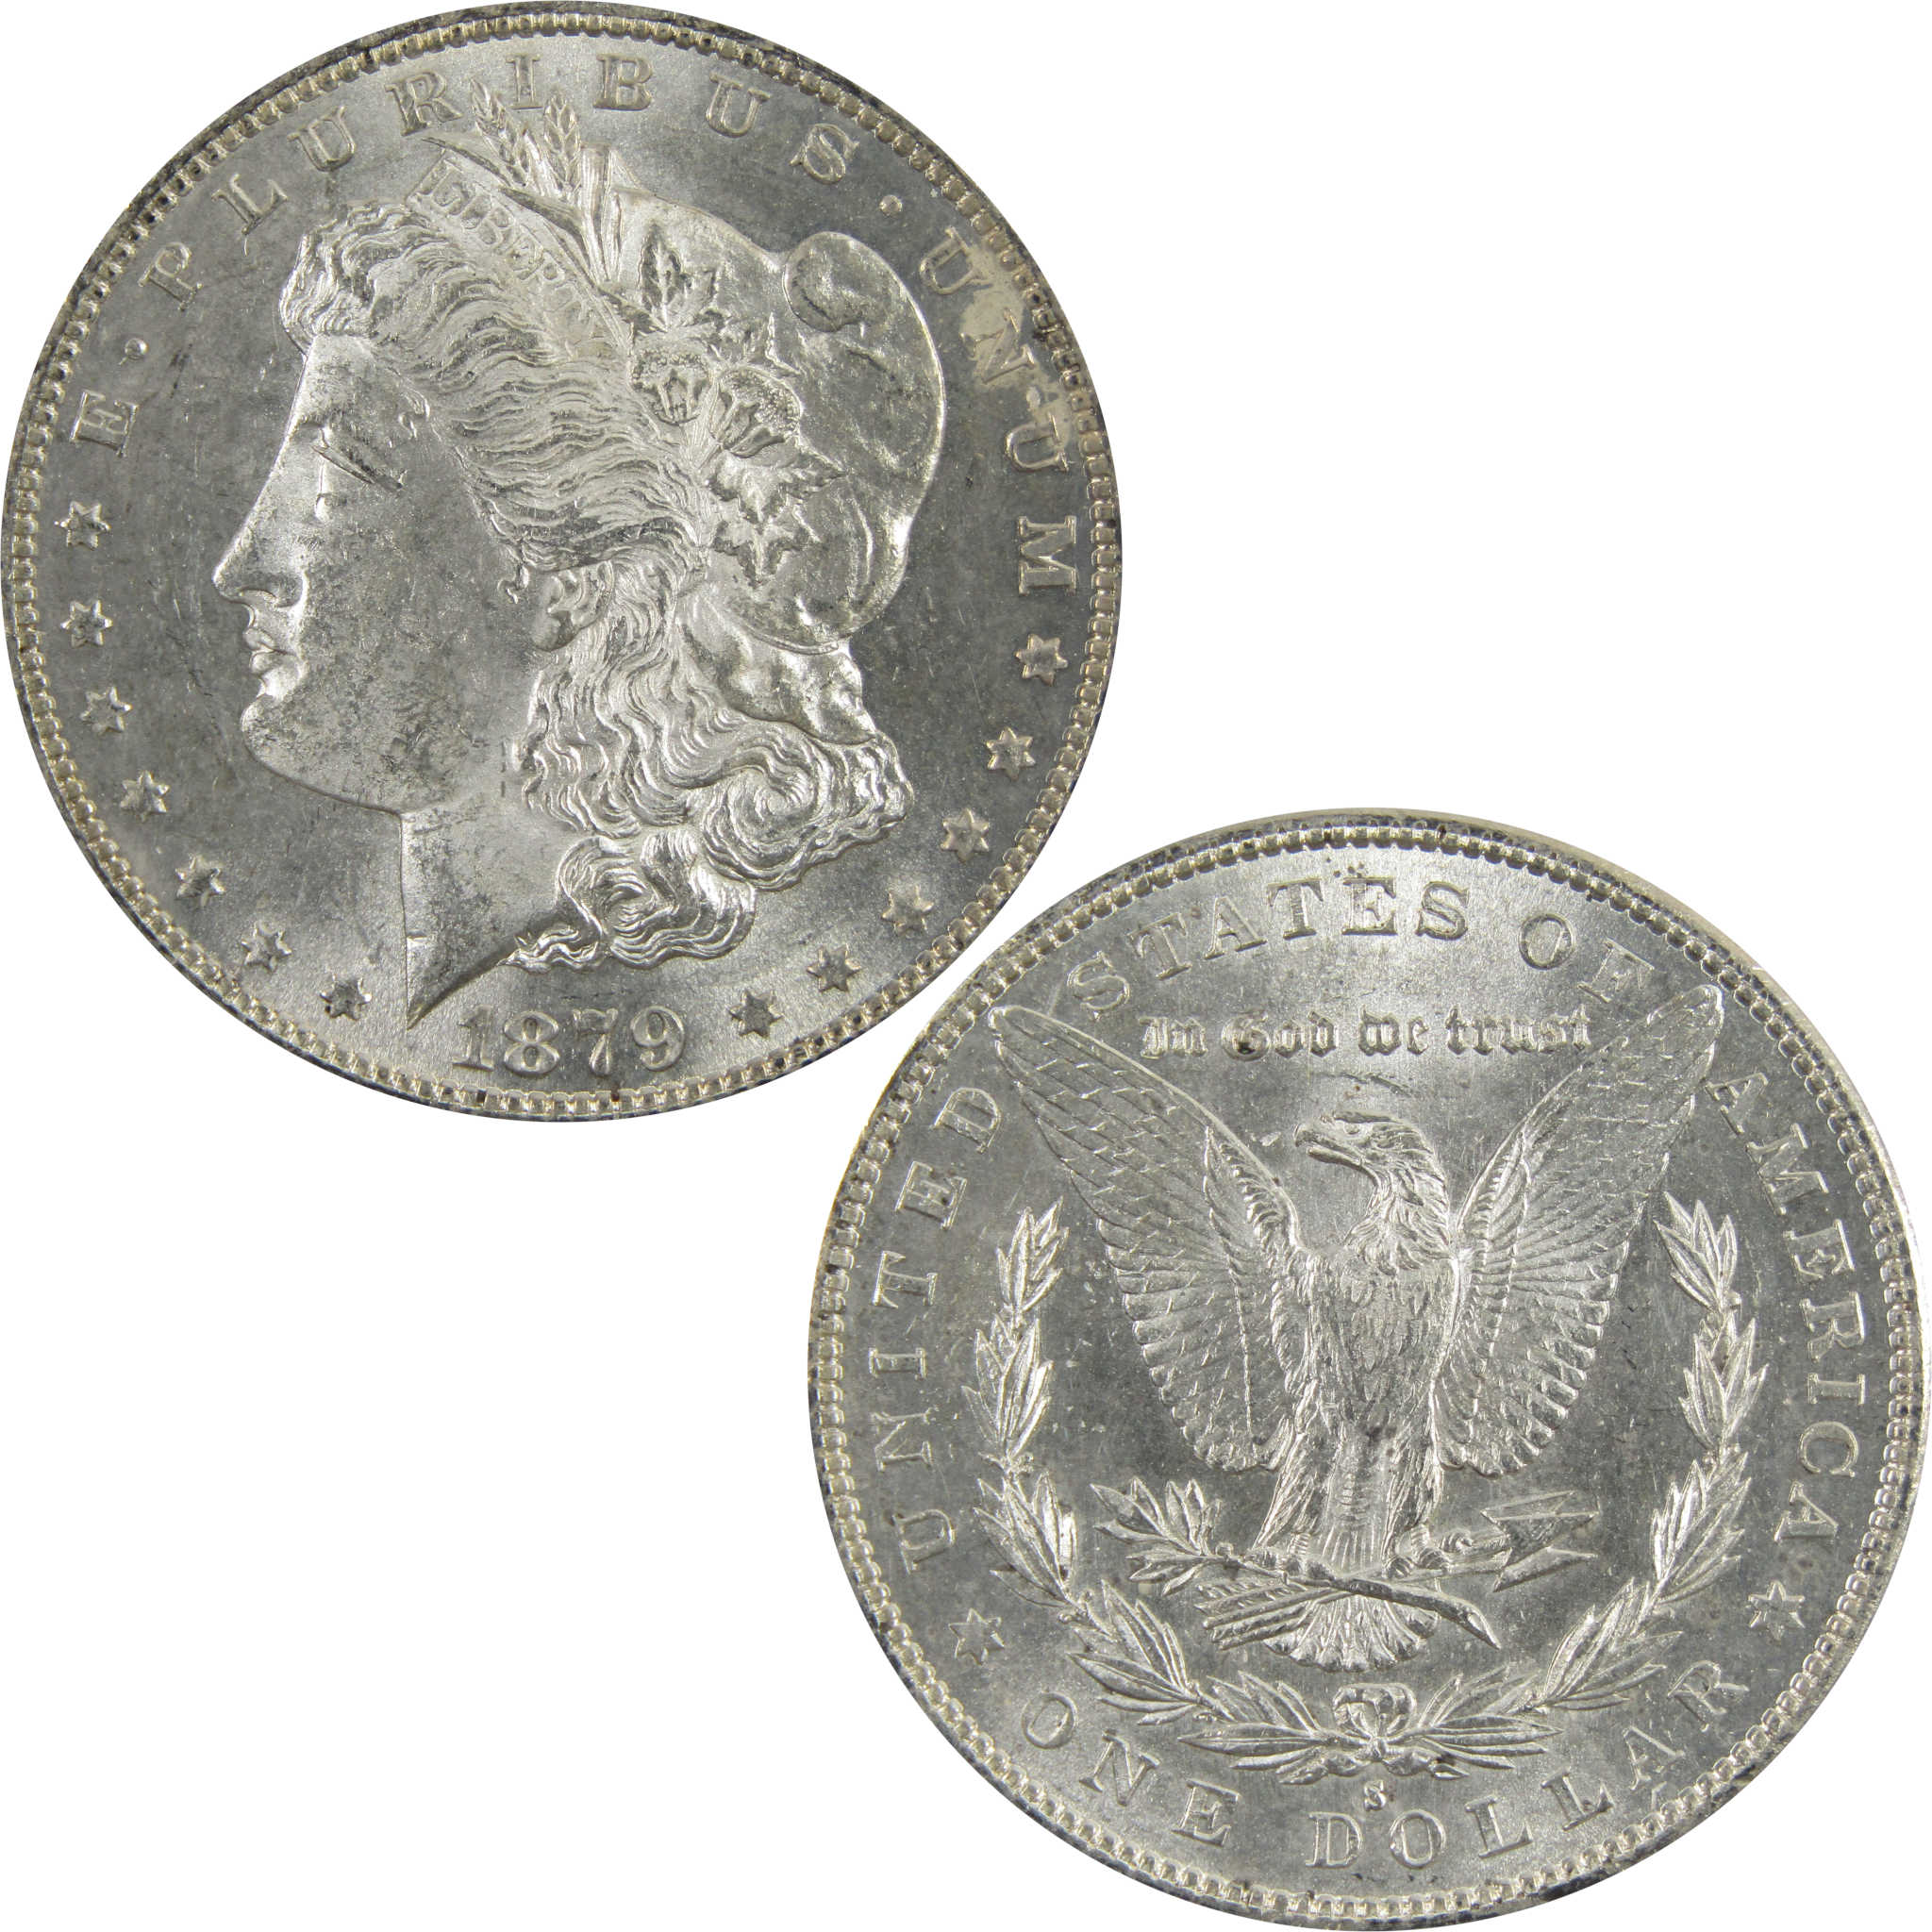 1879 S Morgan Dollar BU Uncirculated 90% Silver $1 Coin SKU:I5192 - Morgan coin - Morgan silver dollar - Morgan silver dollar for sale - Profile Coins &amp; Collectibles